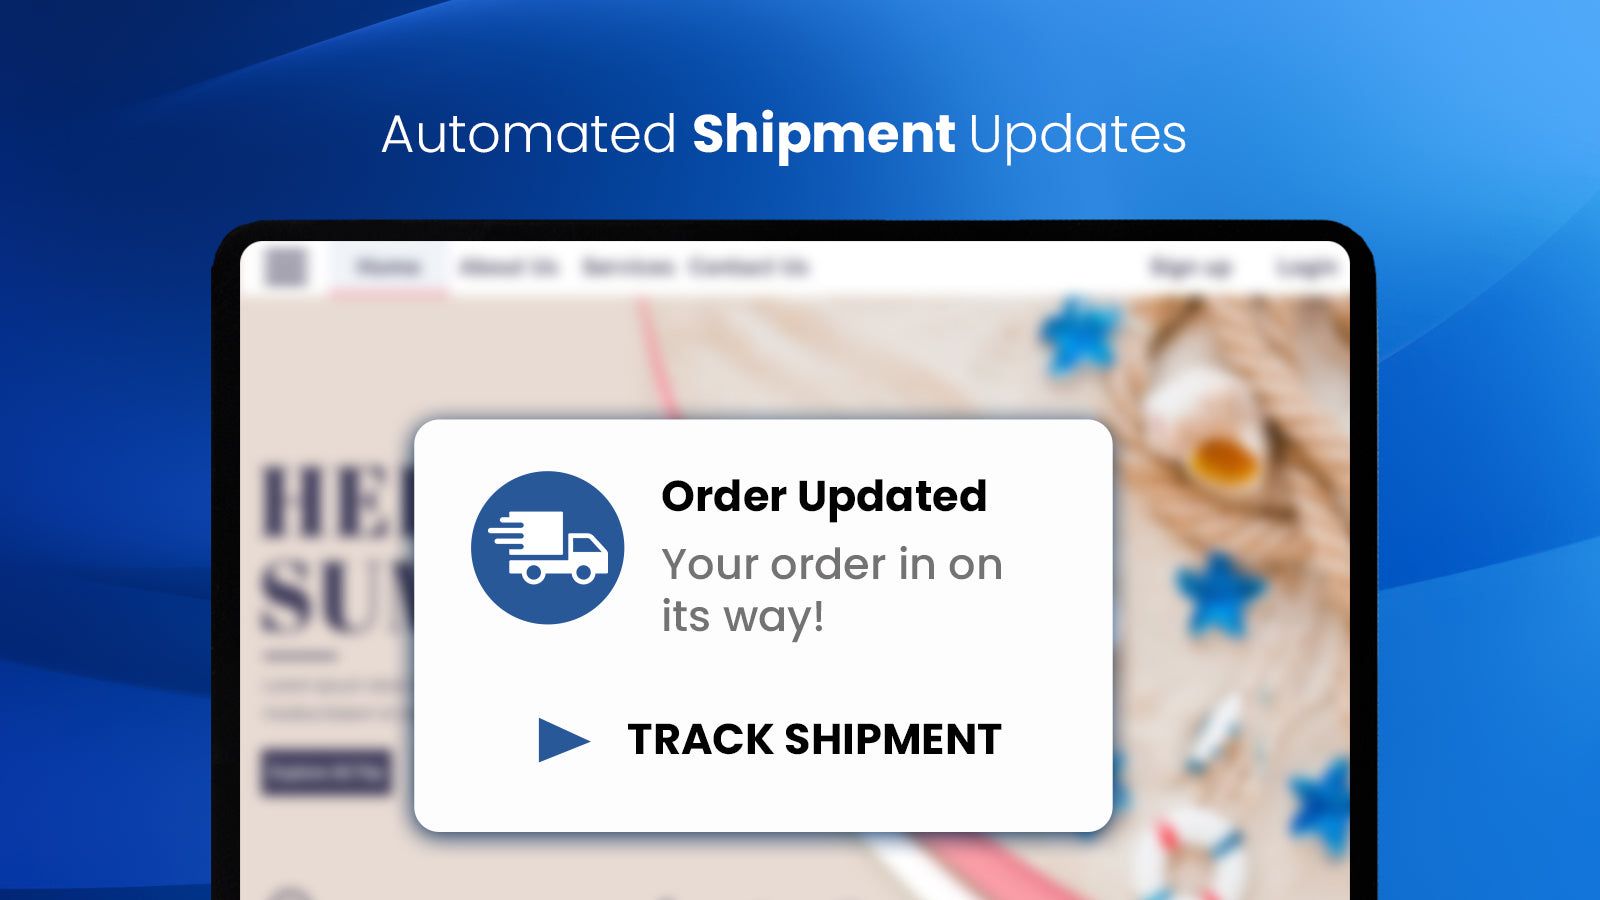 Automated shipment